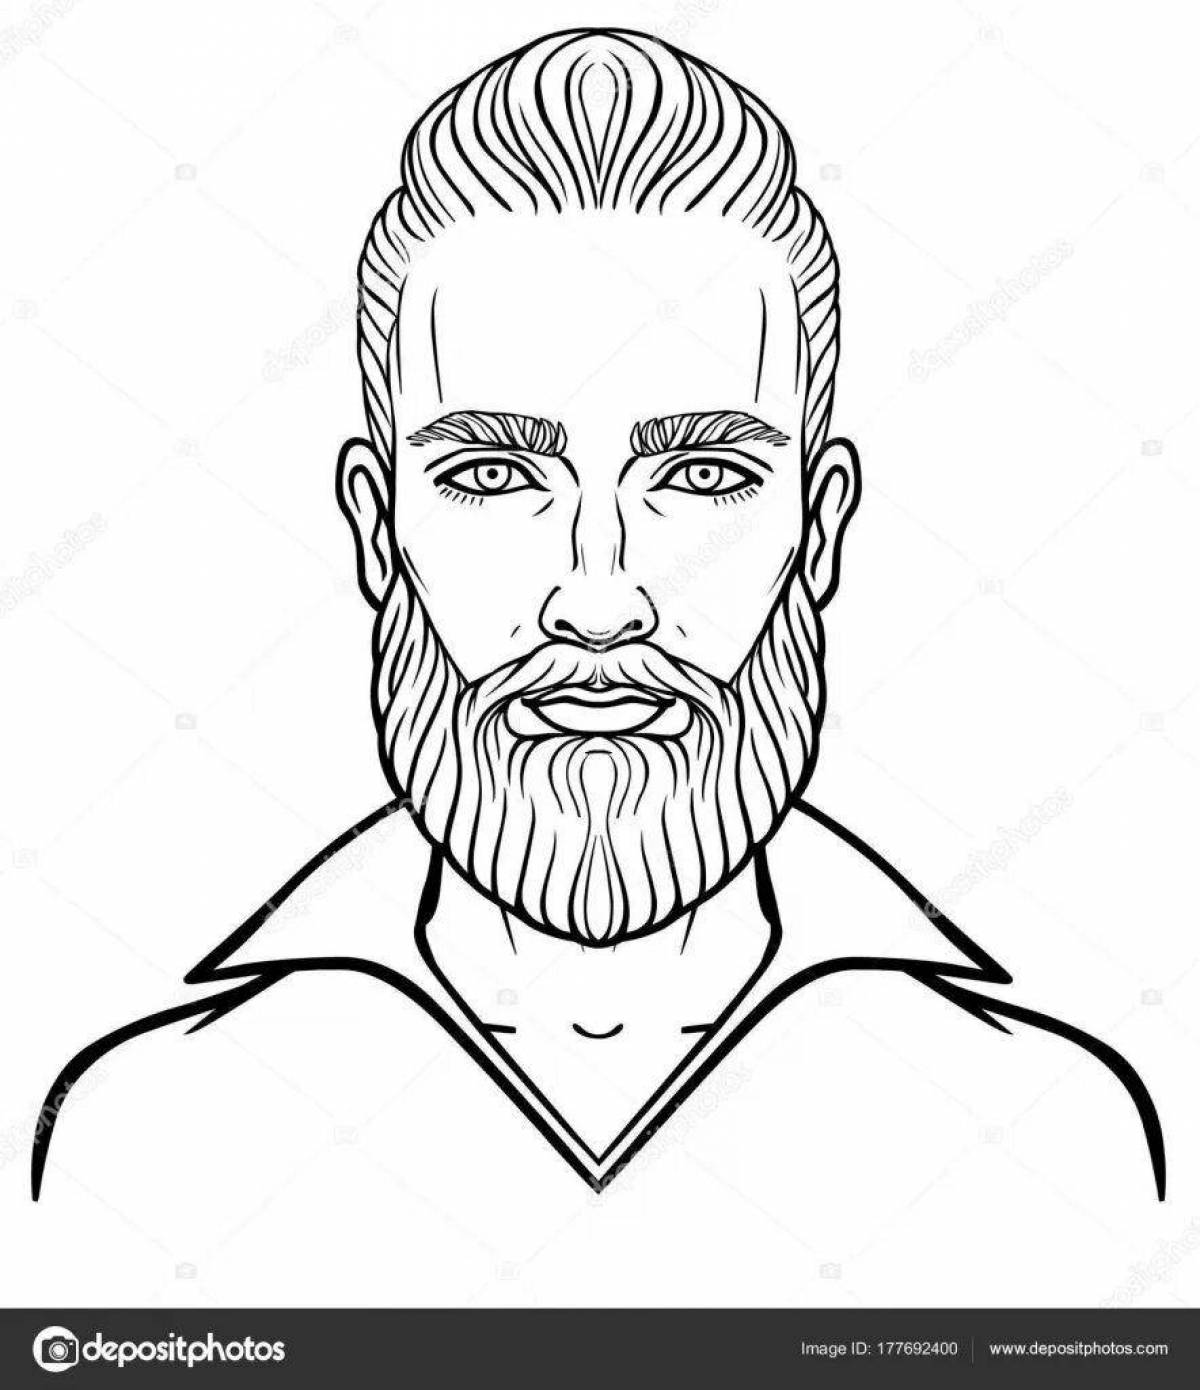 Shiny beard coloring